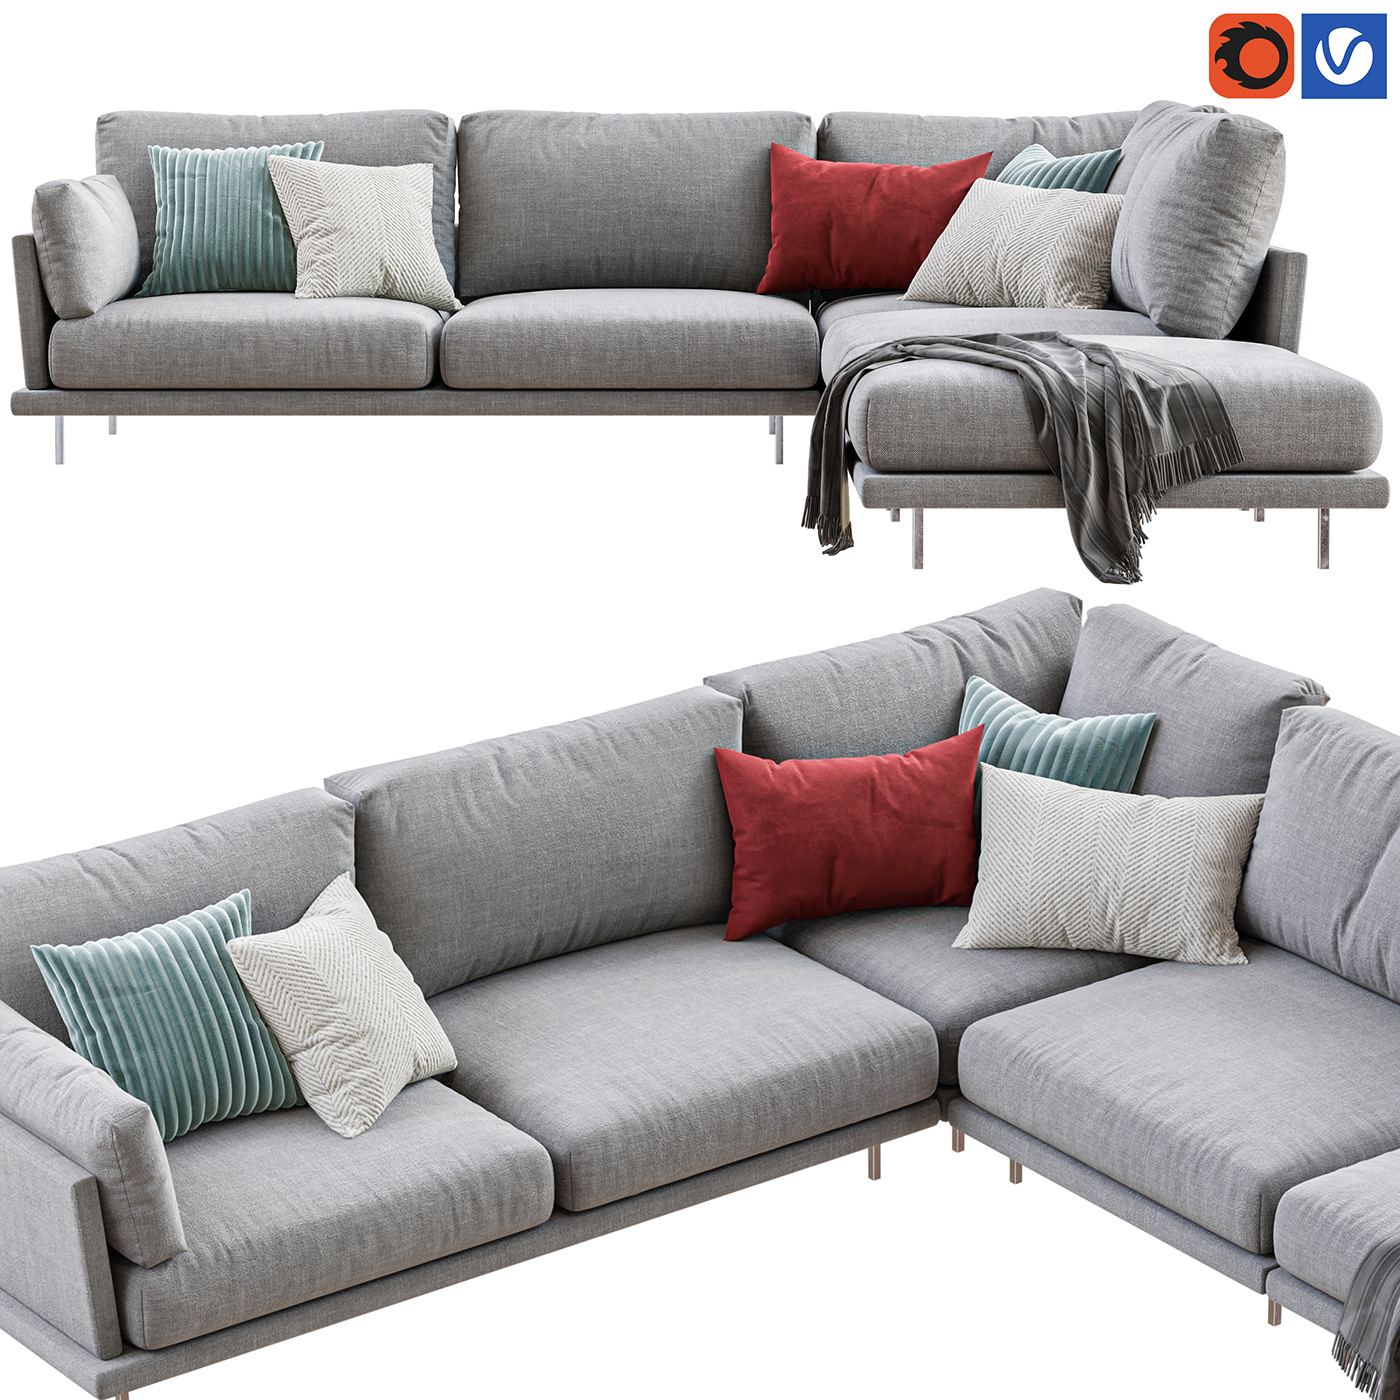 sofa interior design  blanche 3dmodel 3d modeling 3ds max visualization architecture Interior archviz